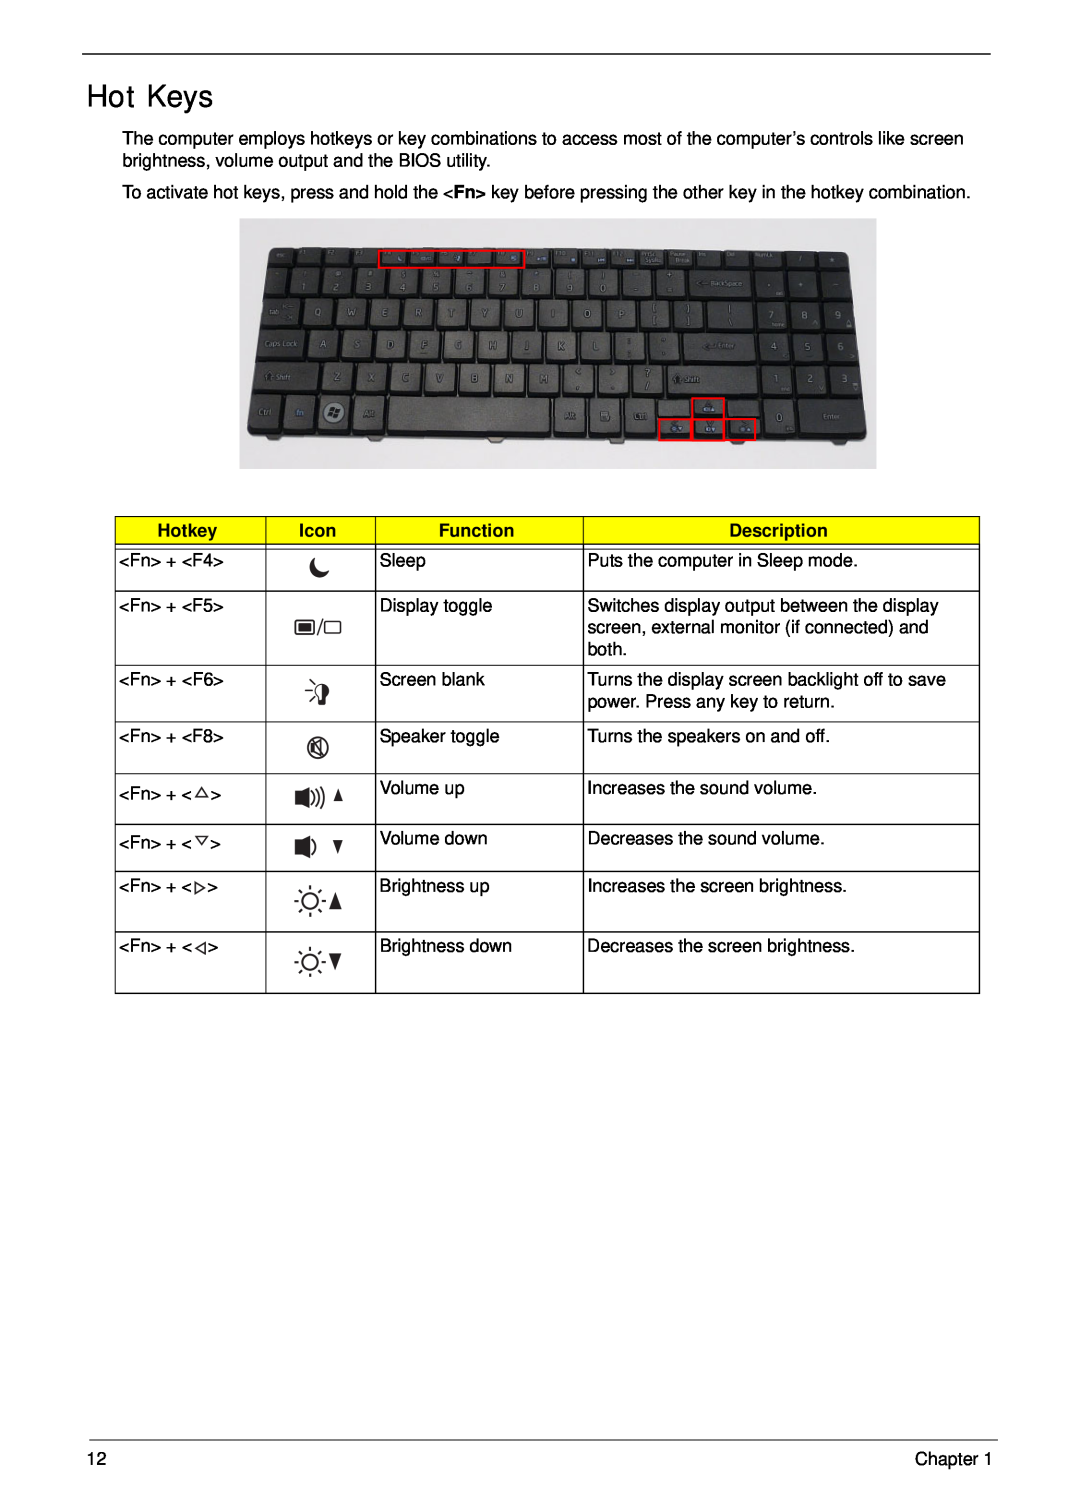 Acer 7715Z, 7315 manual Hot Keys, Hotkey, Icon, Function, Description 